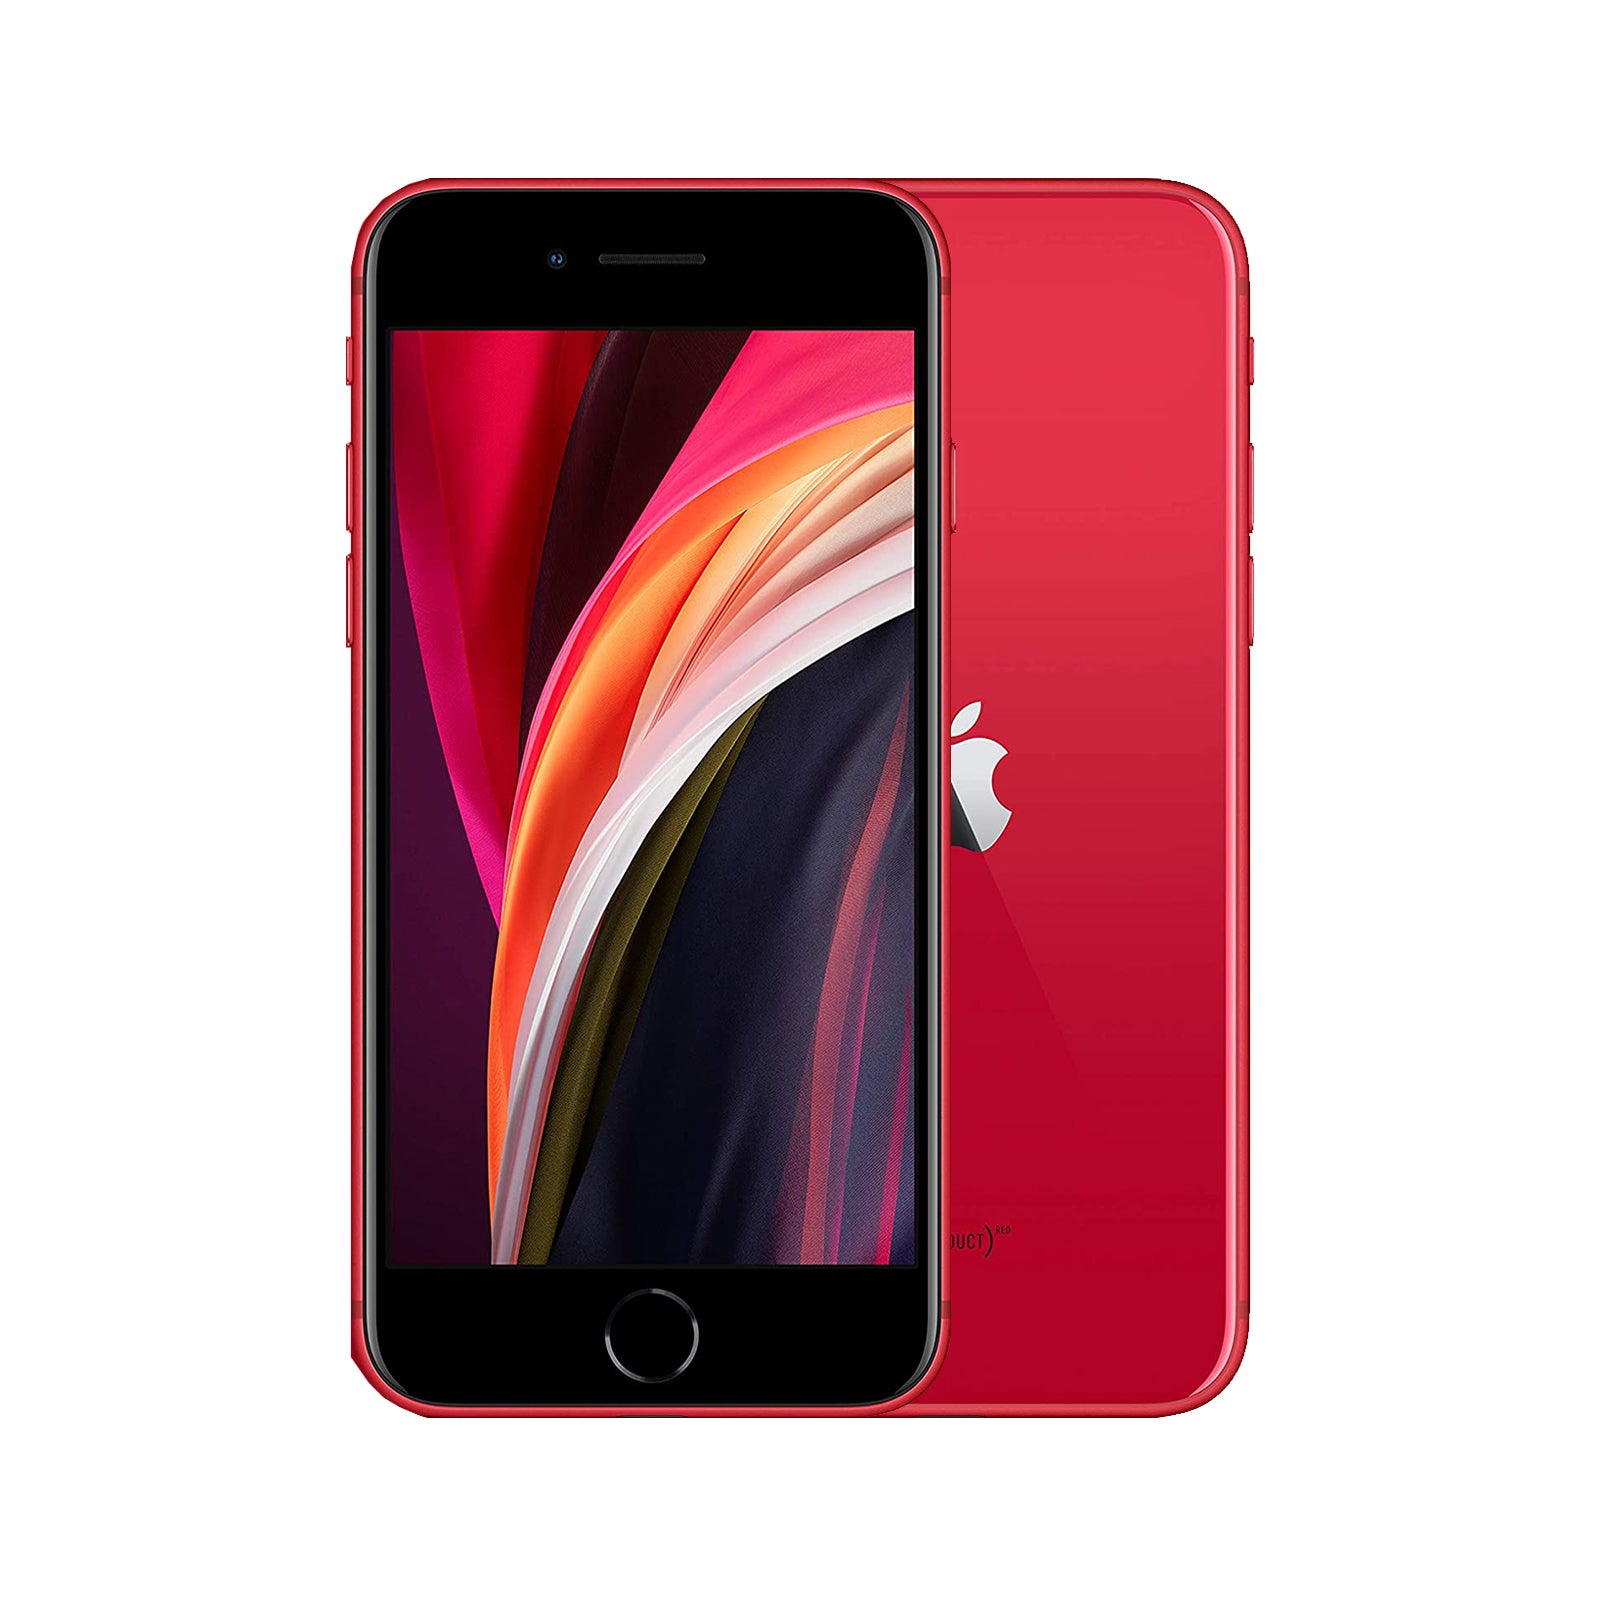 Apple iPhone SE (2020) 64GB Red - Very Good - Refurbished